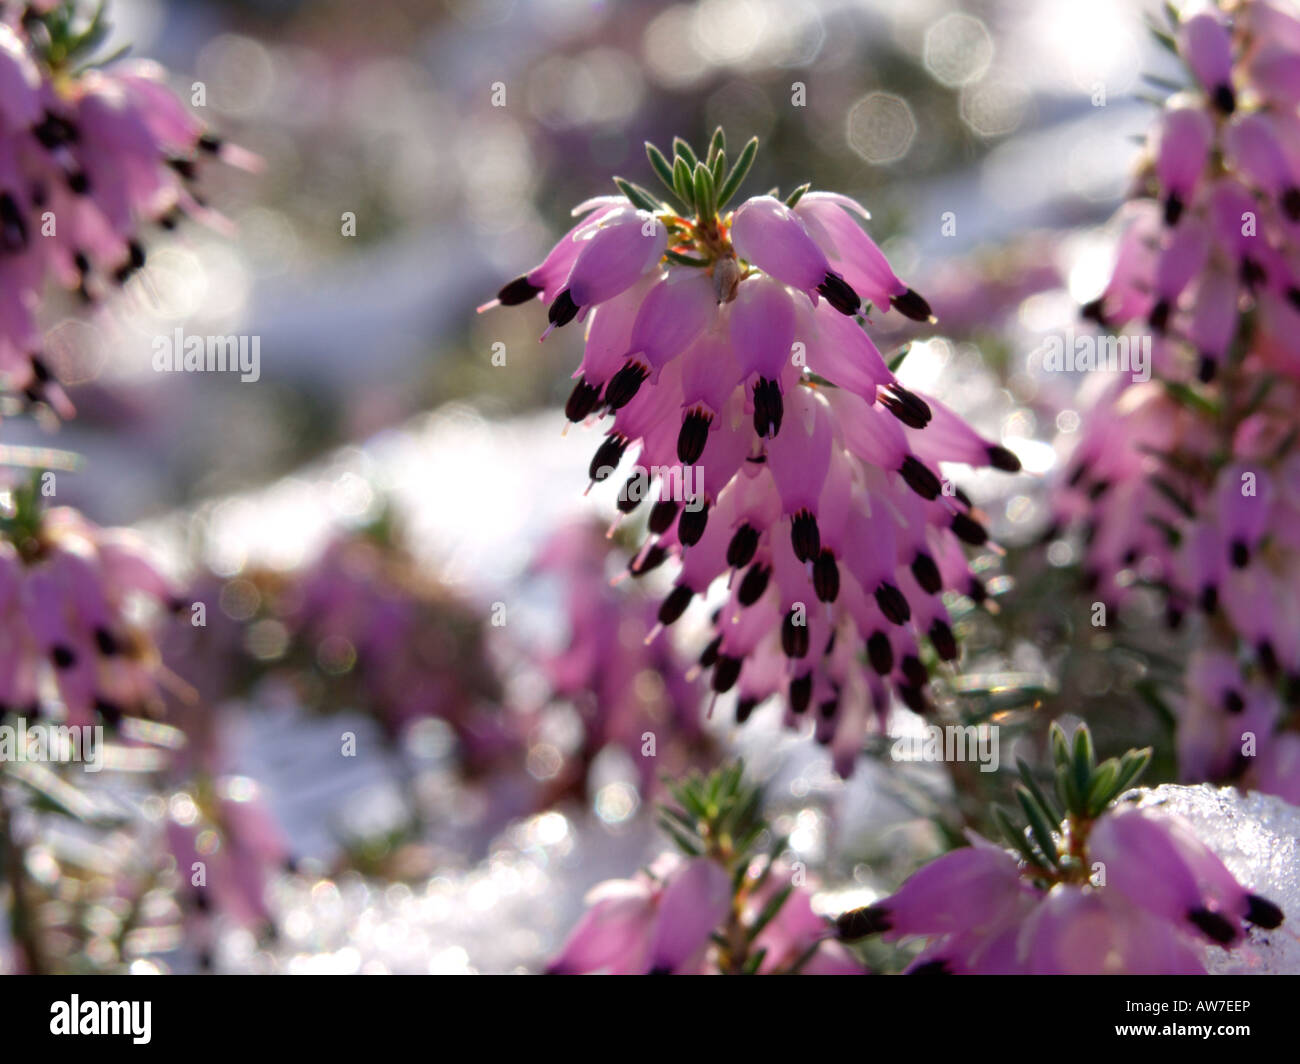 Winter heather (Erica carnea syn. Erica herbacea) Stock Photo